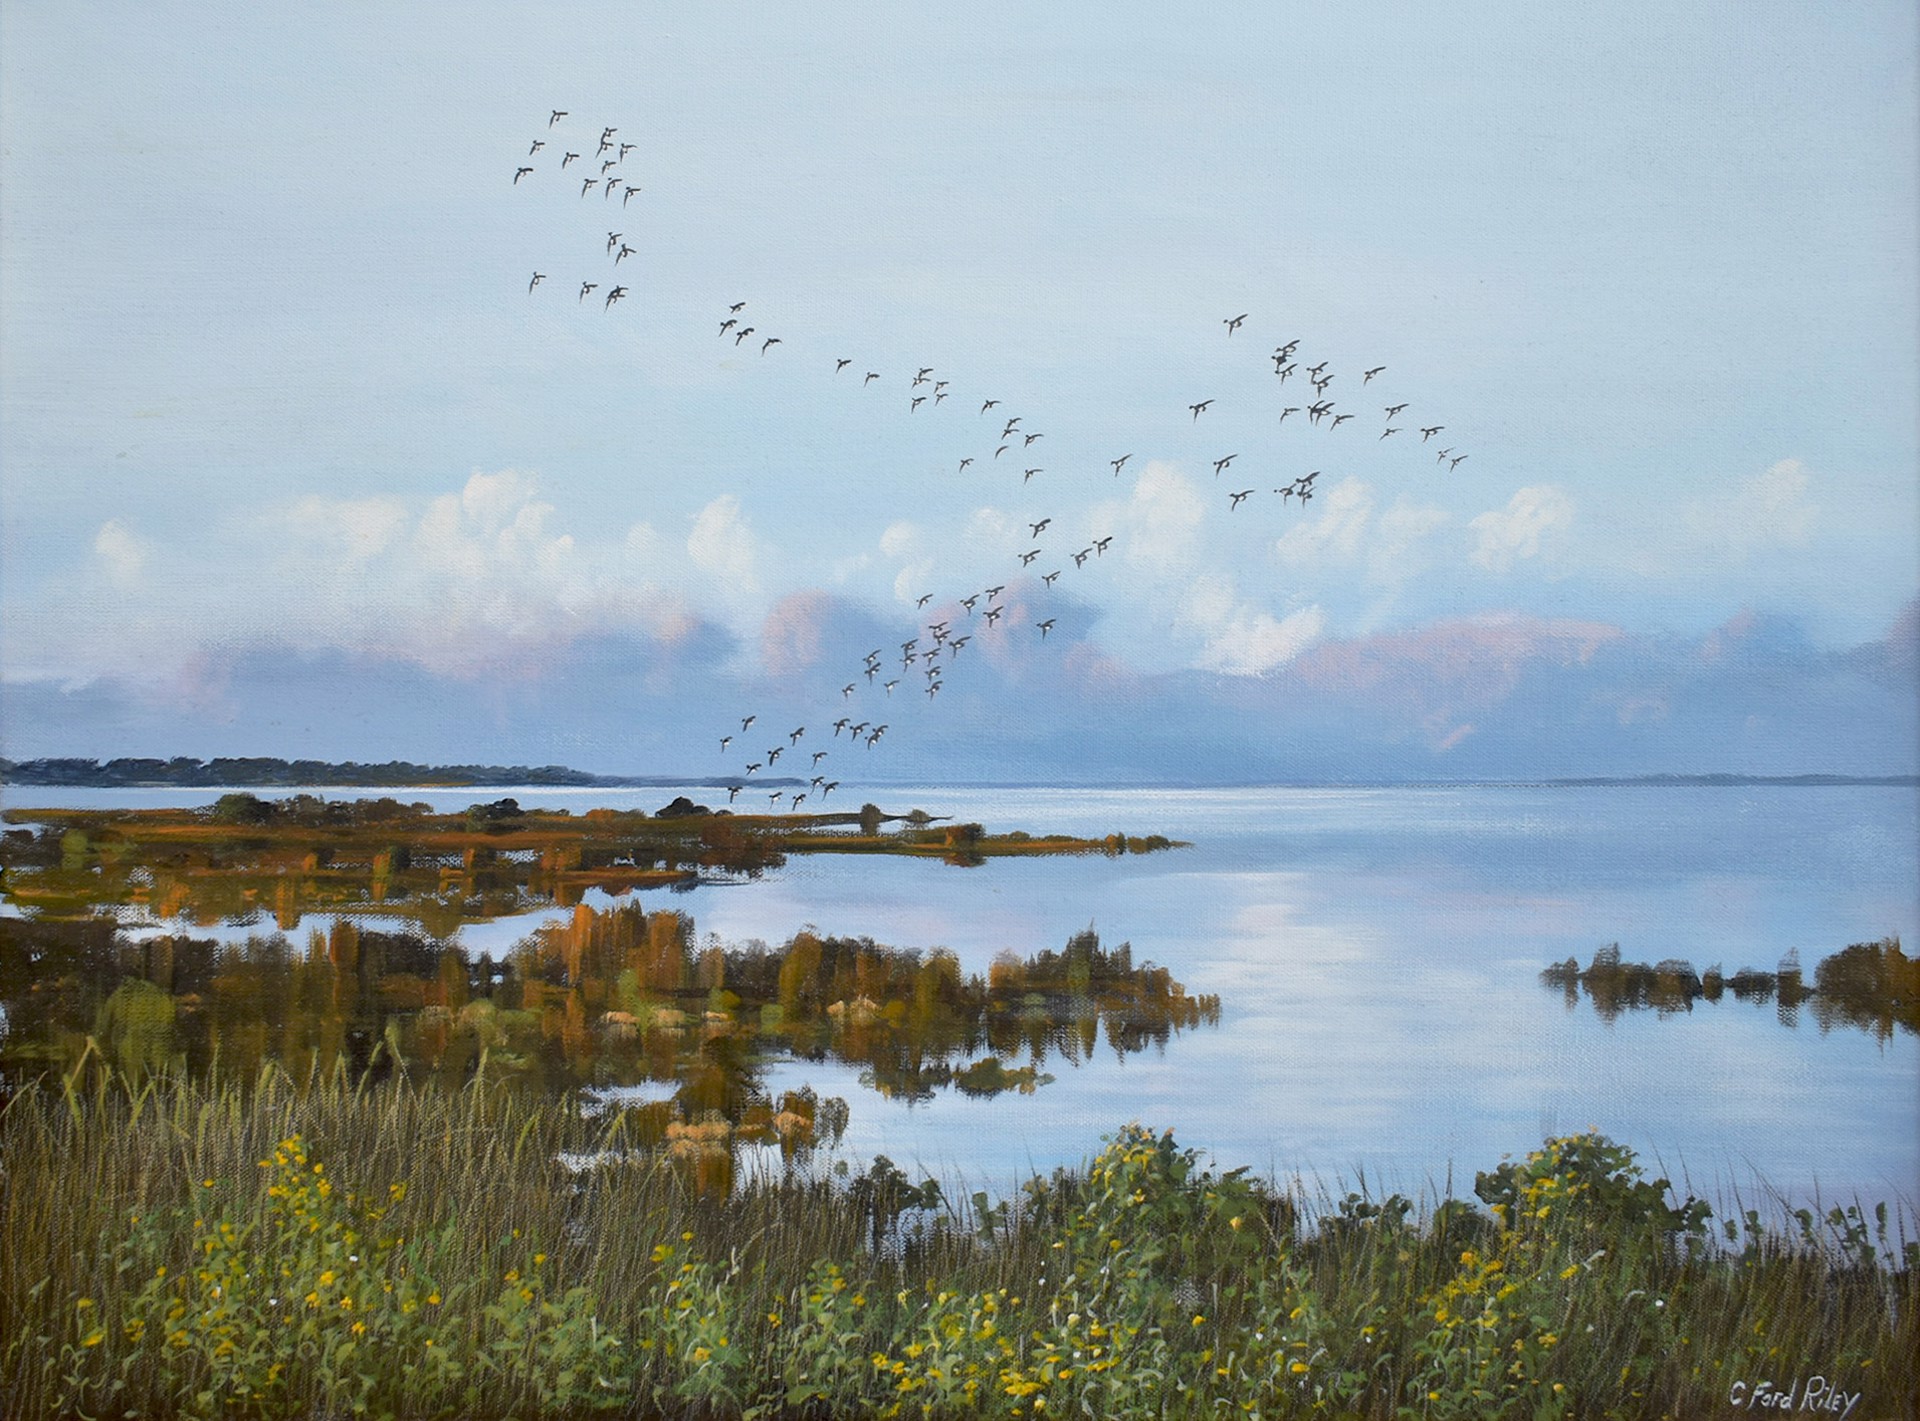 Birds in Flight by C. Ford Riley